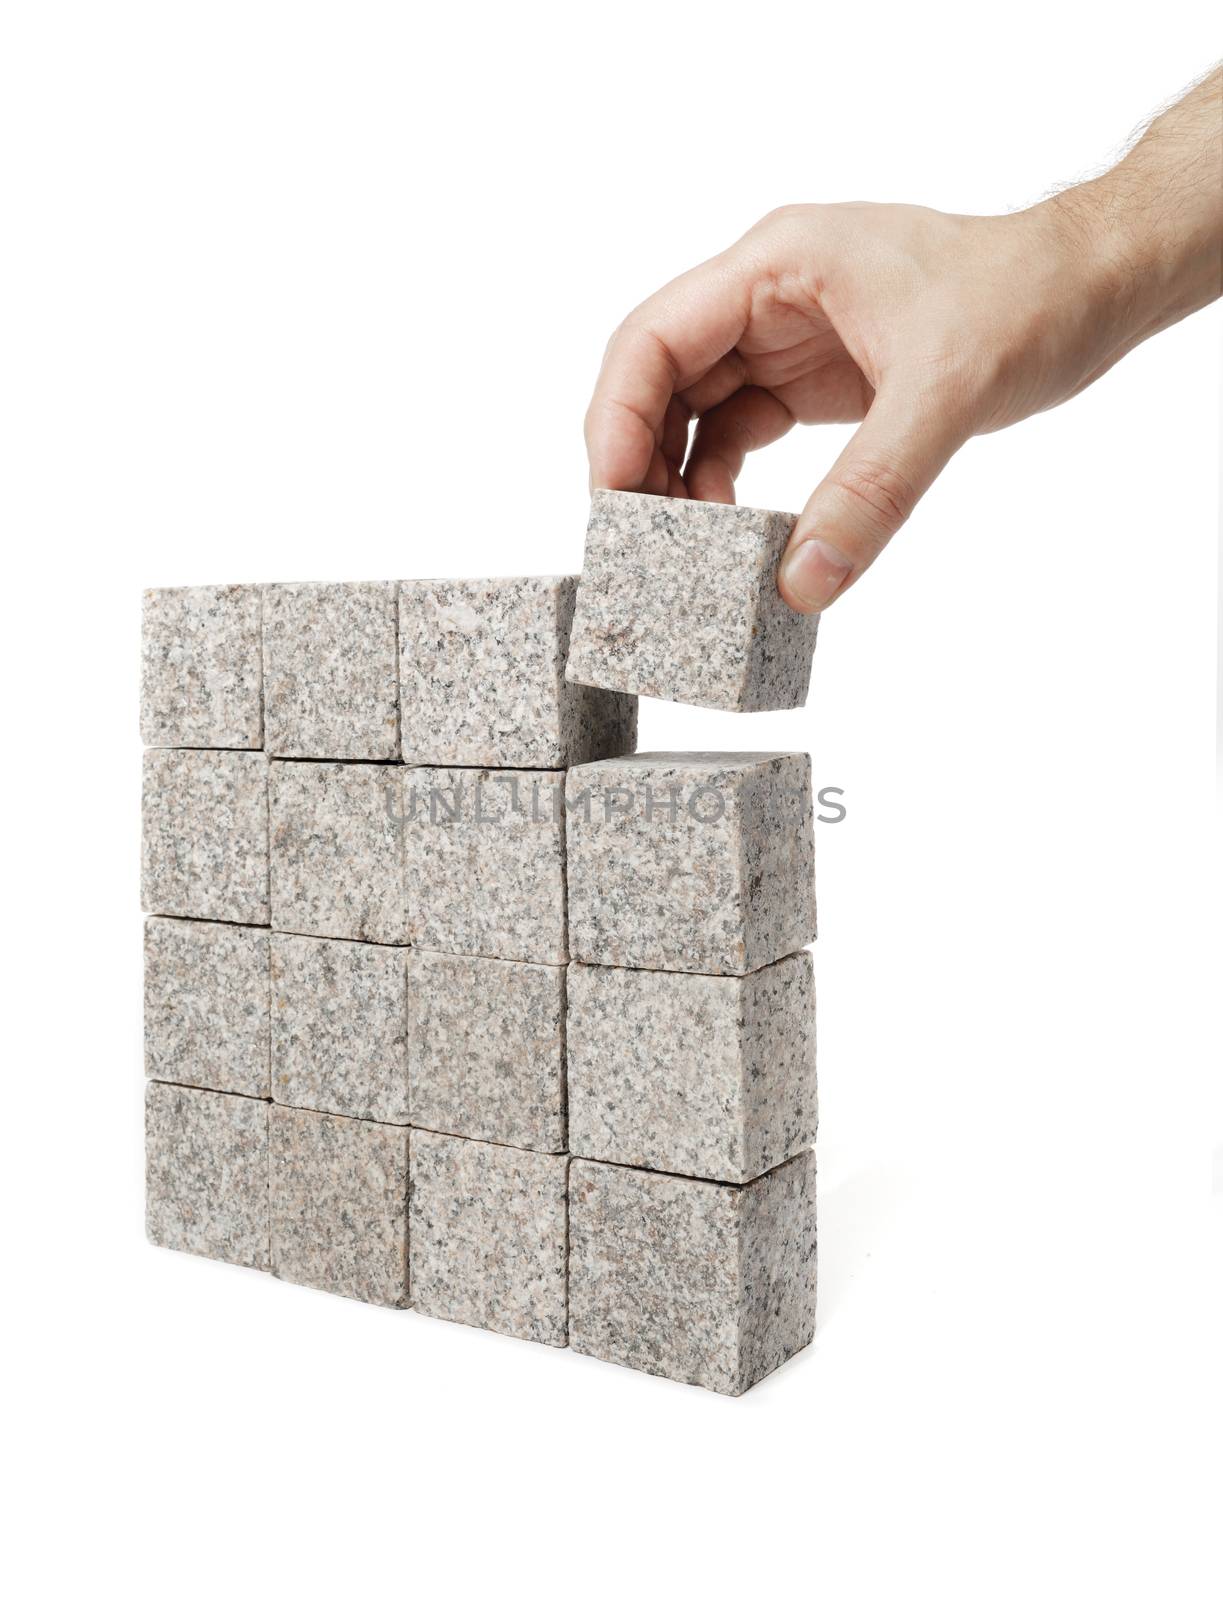 Man making a square shape of blocks made of granite rock.